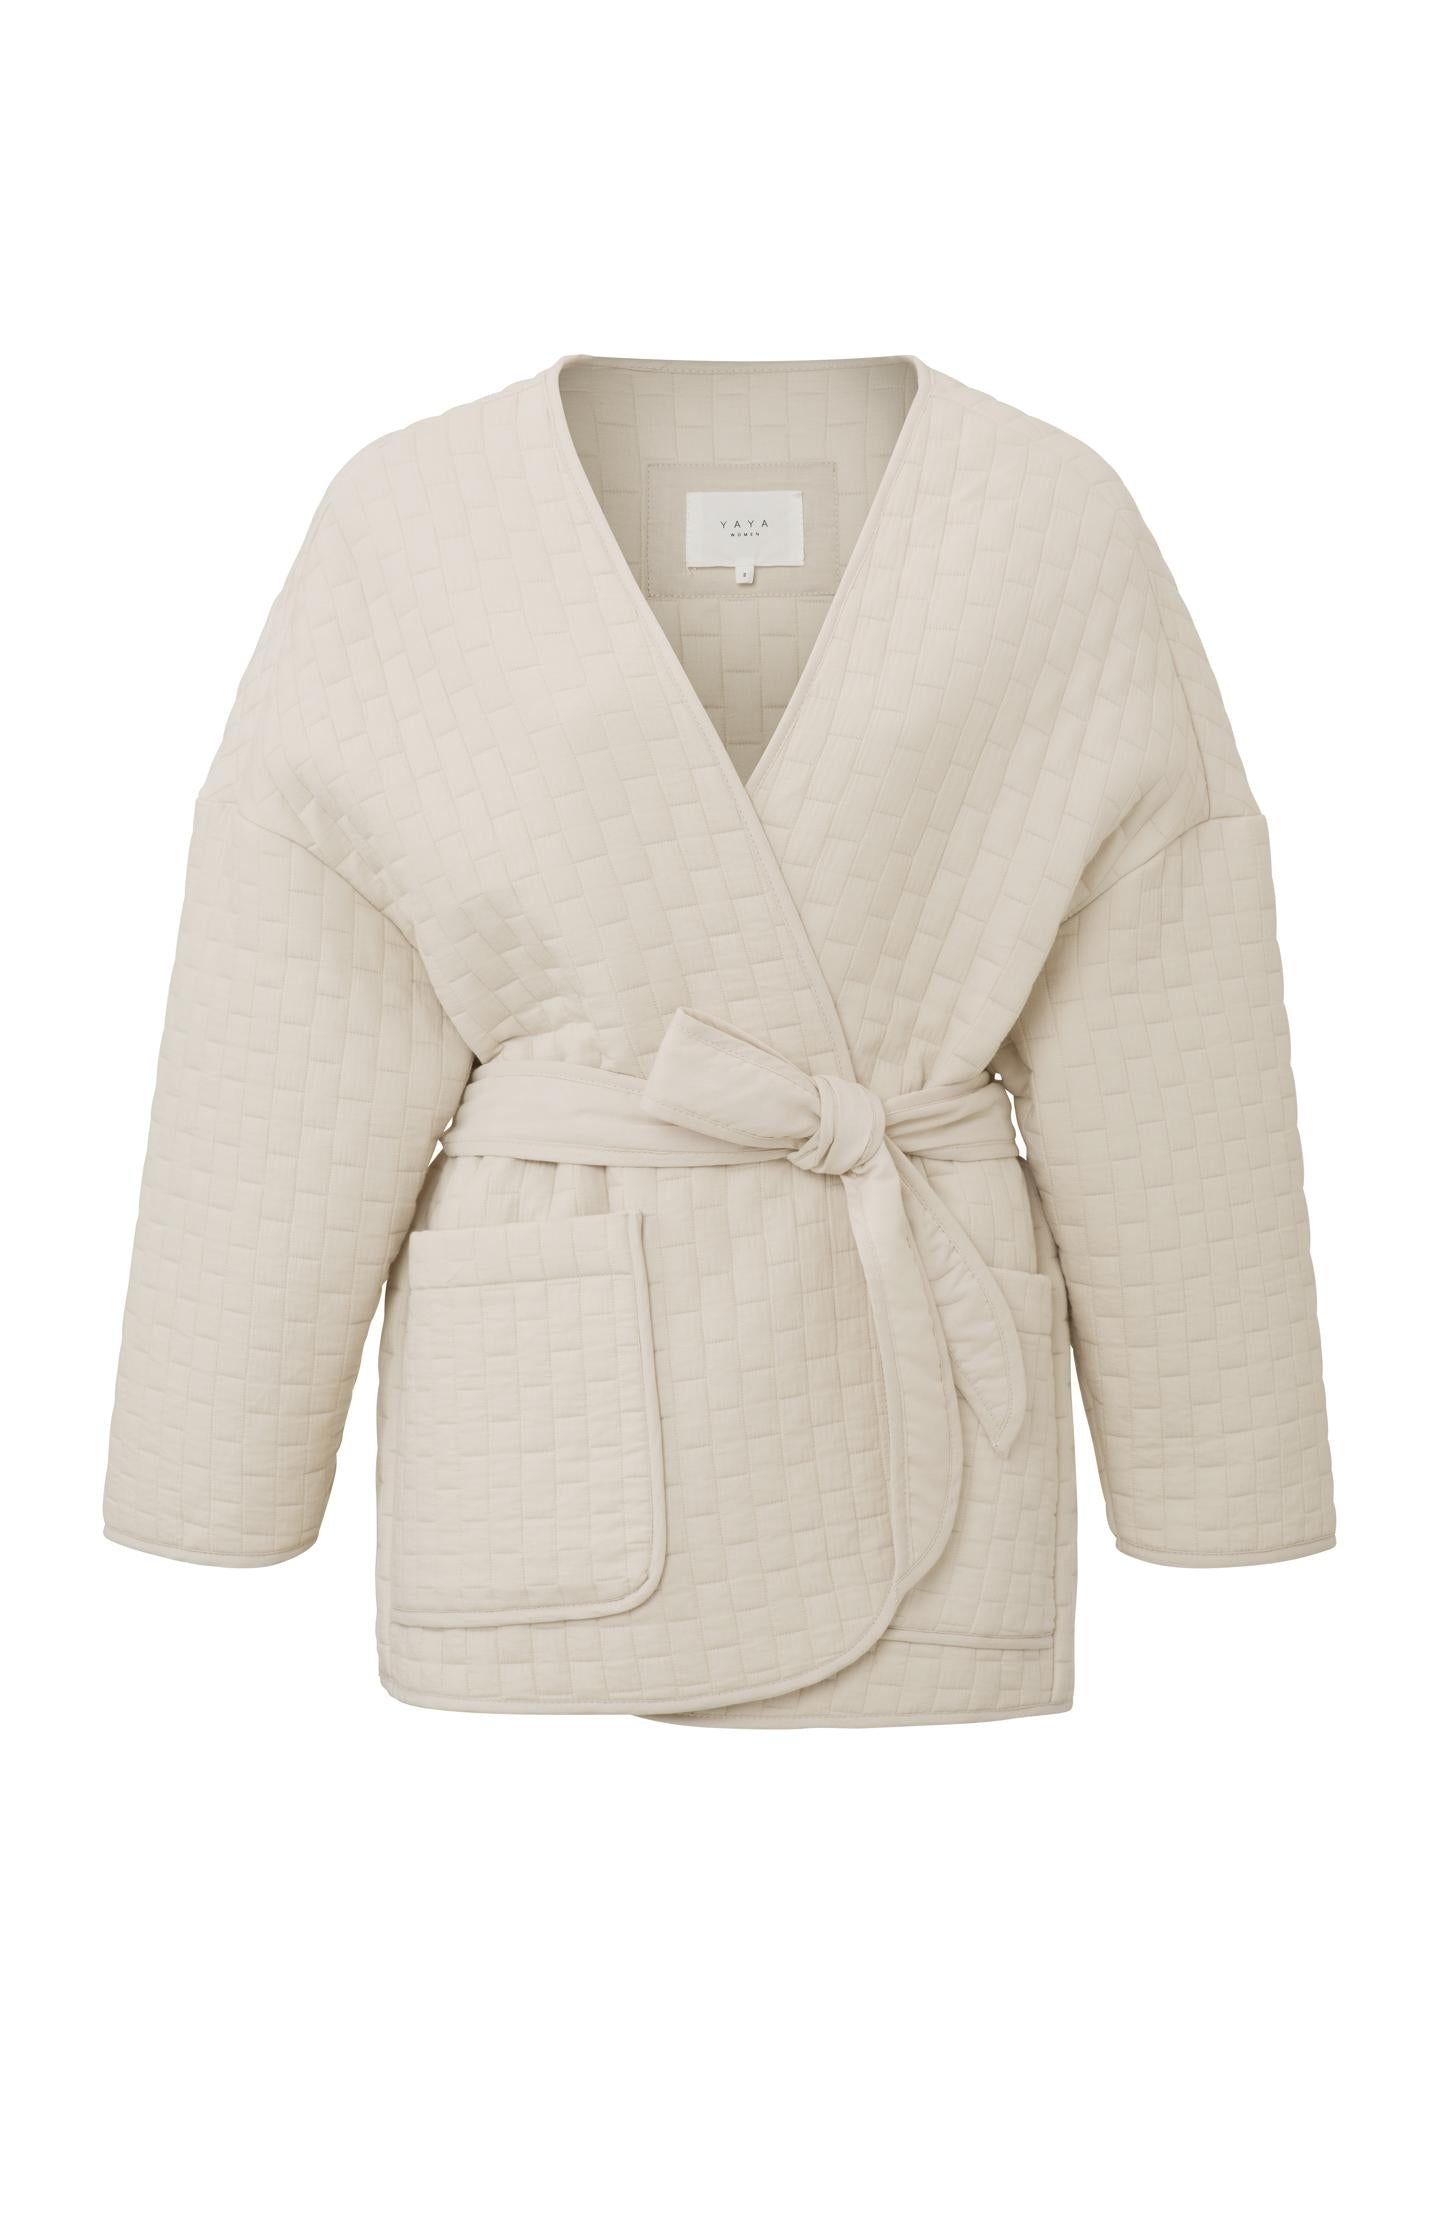 Kimono jacket with V-neck, long sleeves and waistband - Type: product